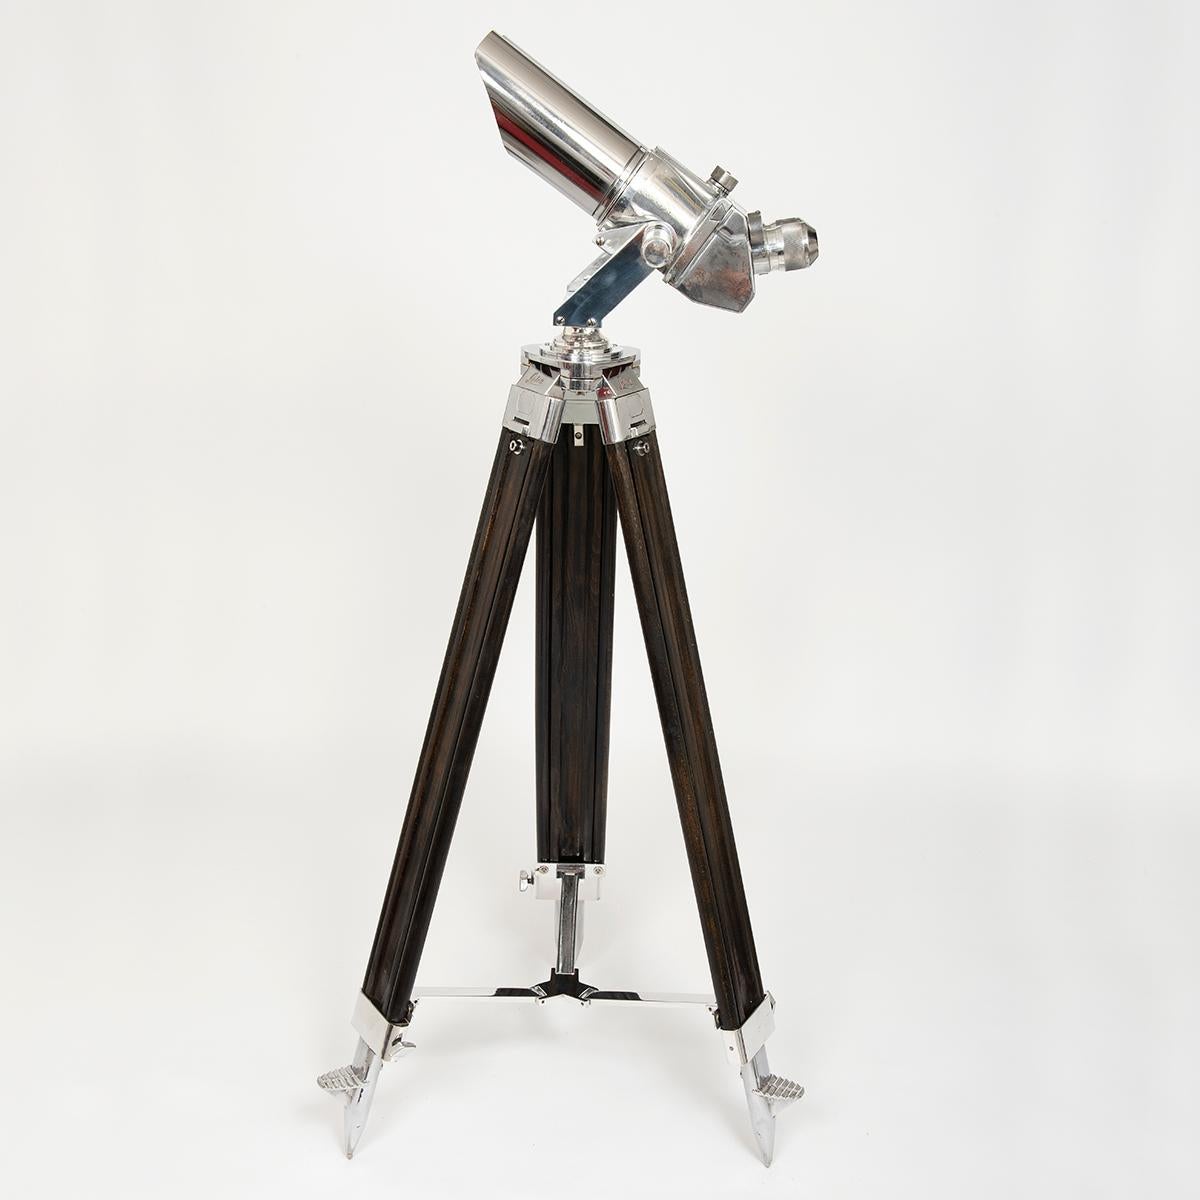 Desirable Jos Schneider & Co DKL Binoculars, Rare & Historical Object 5